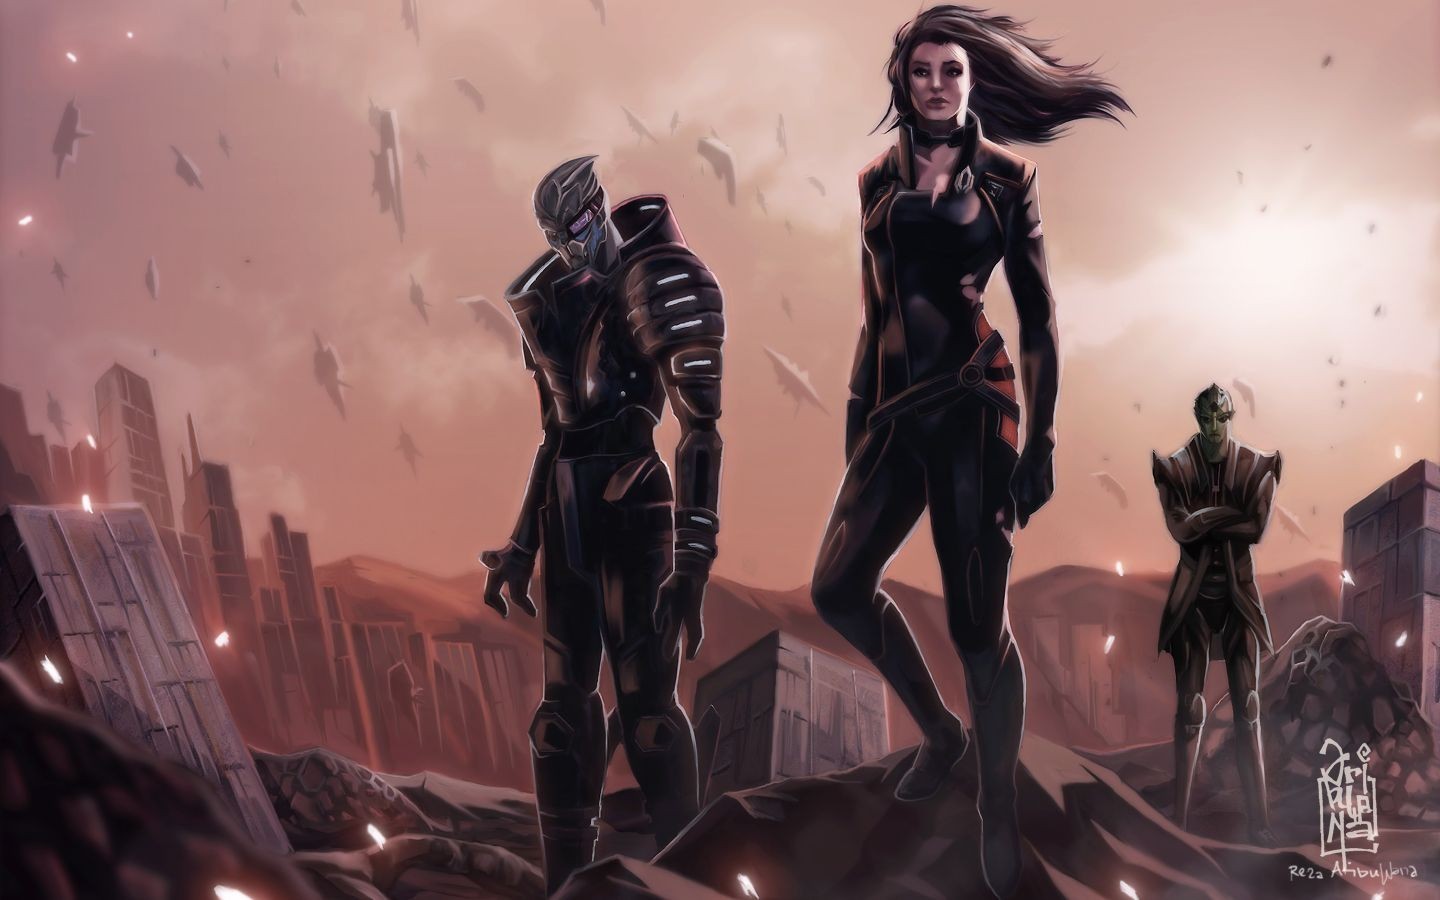 General 1440x900 Mass Effect Mass Effect 2 Mass Effect 3 Garrus Vakarian Miranda Lawson Thane Krios video games video game art science fiction women science fiction PC gaming